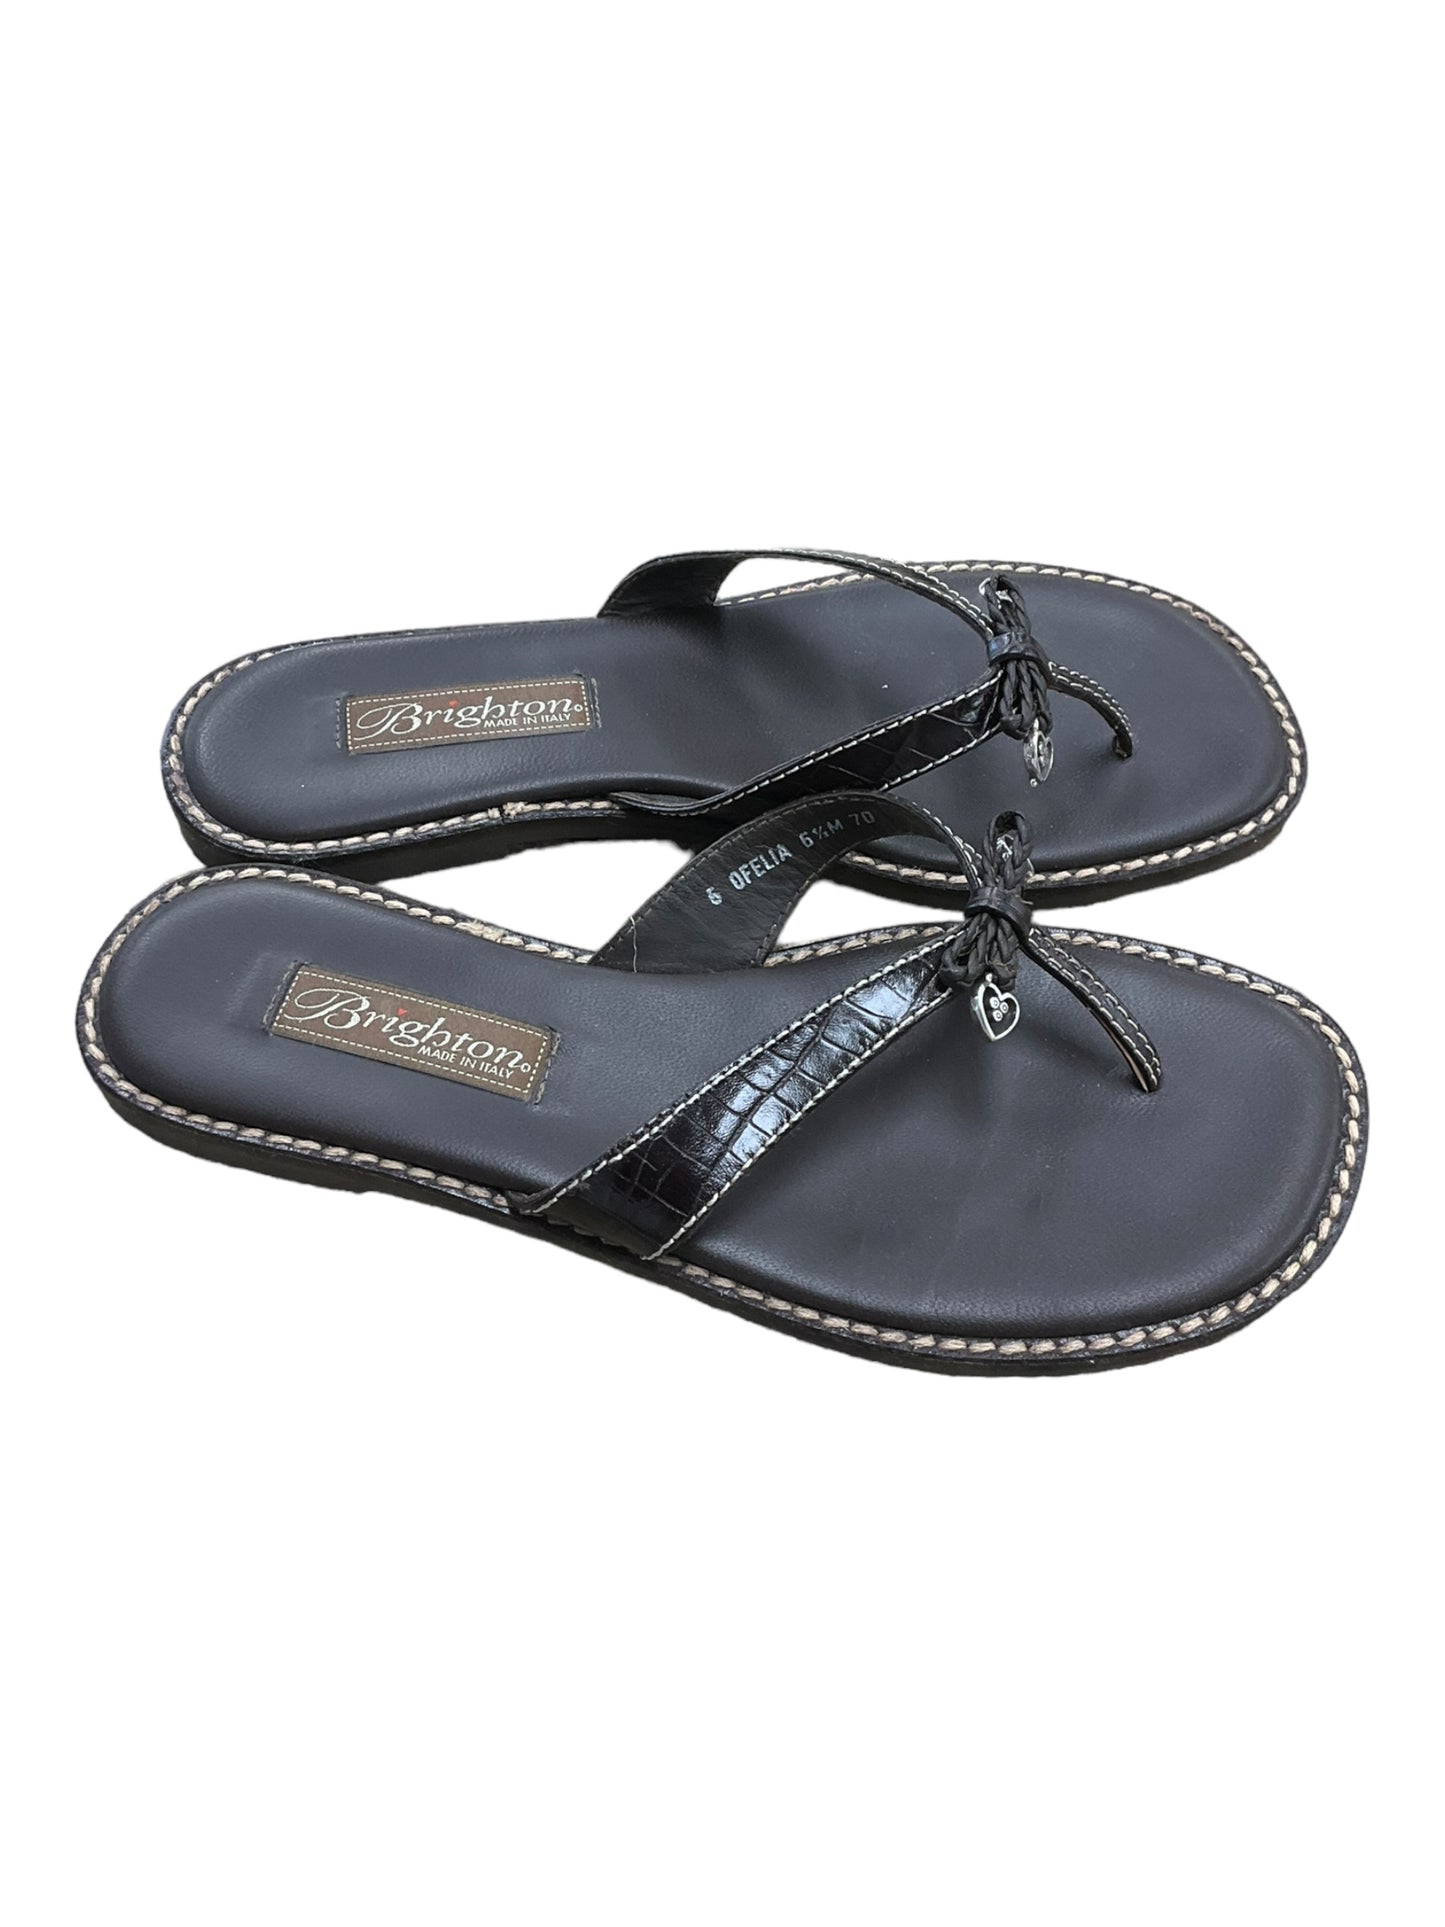 Sandals Designer By Brighton O  Size: 6.5